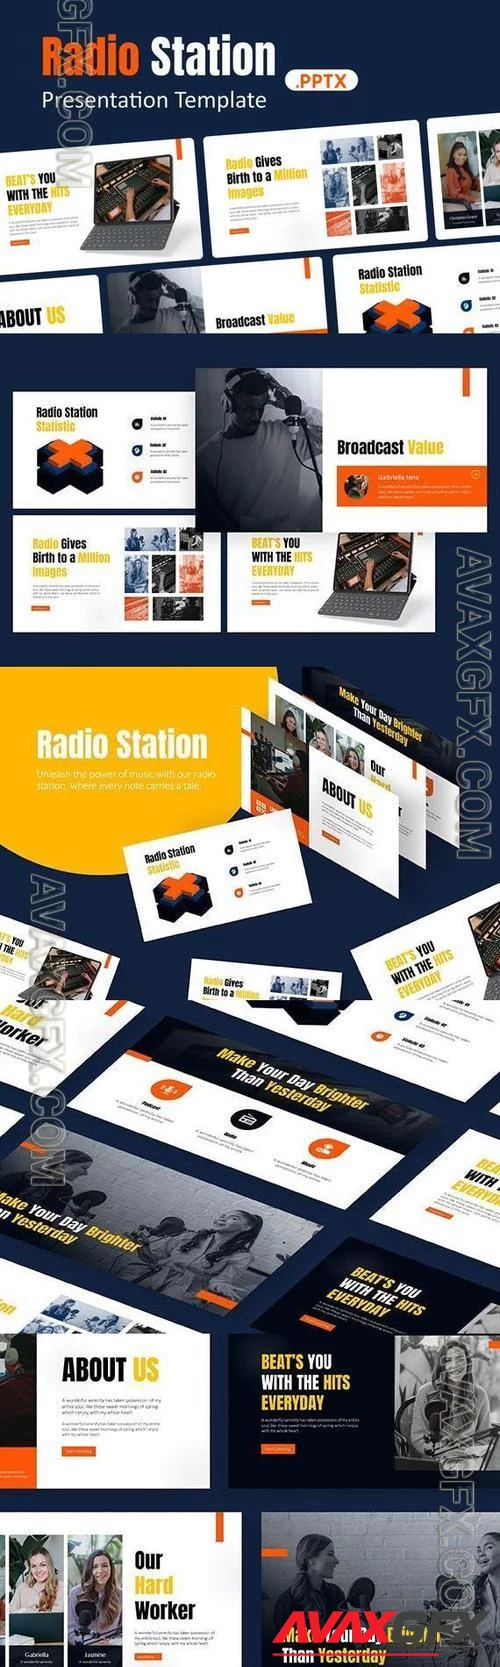 Radio Station Powerpoint Template